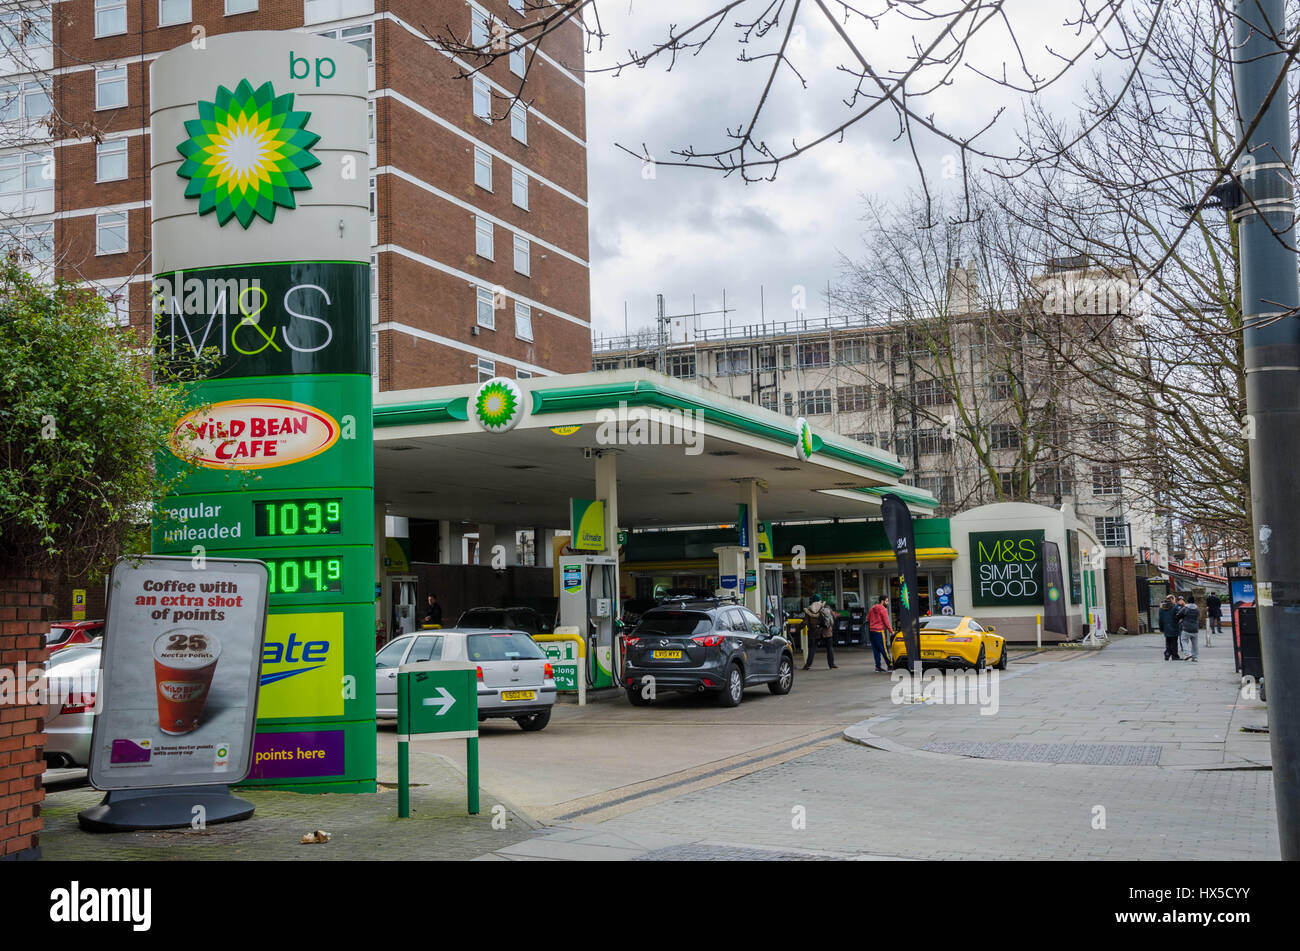 The BP Petrol station on Shepherd's Bush Green in London Stock Photo